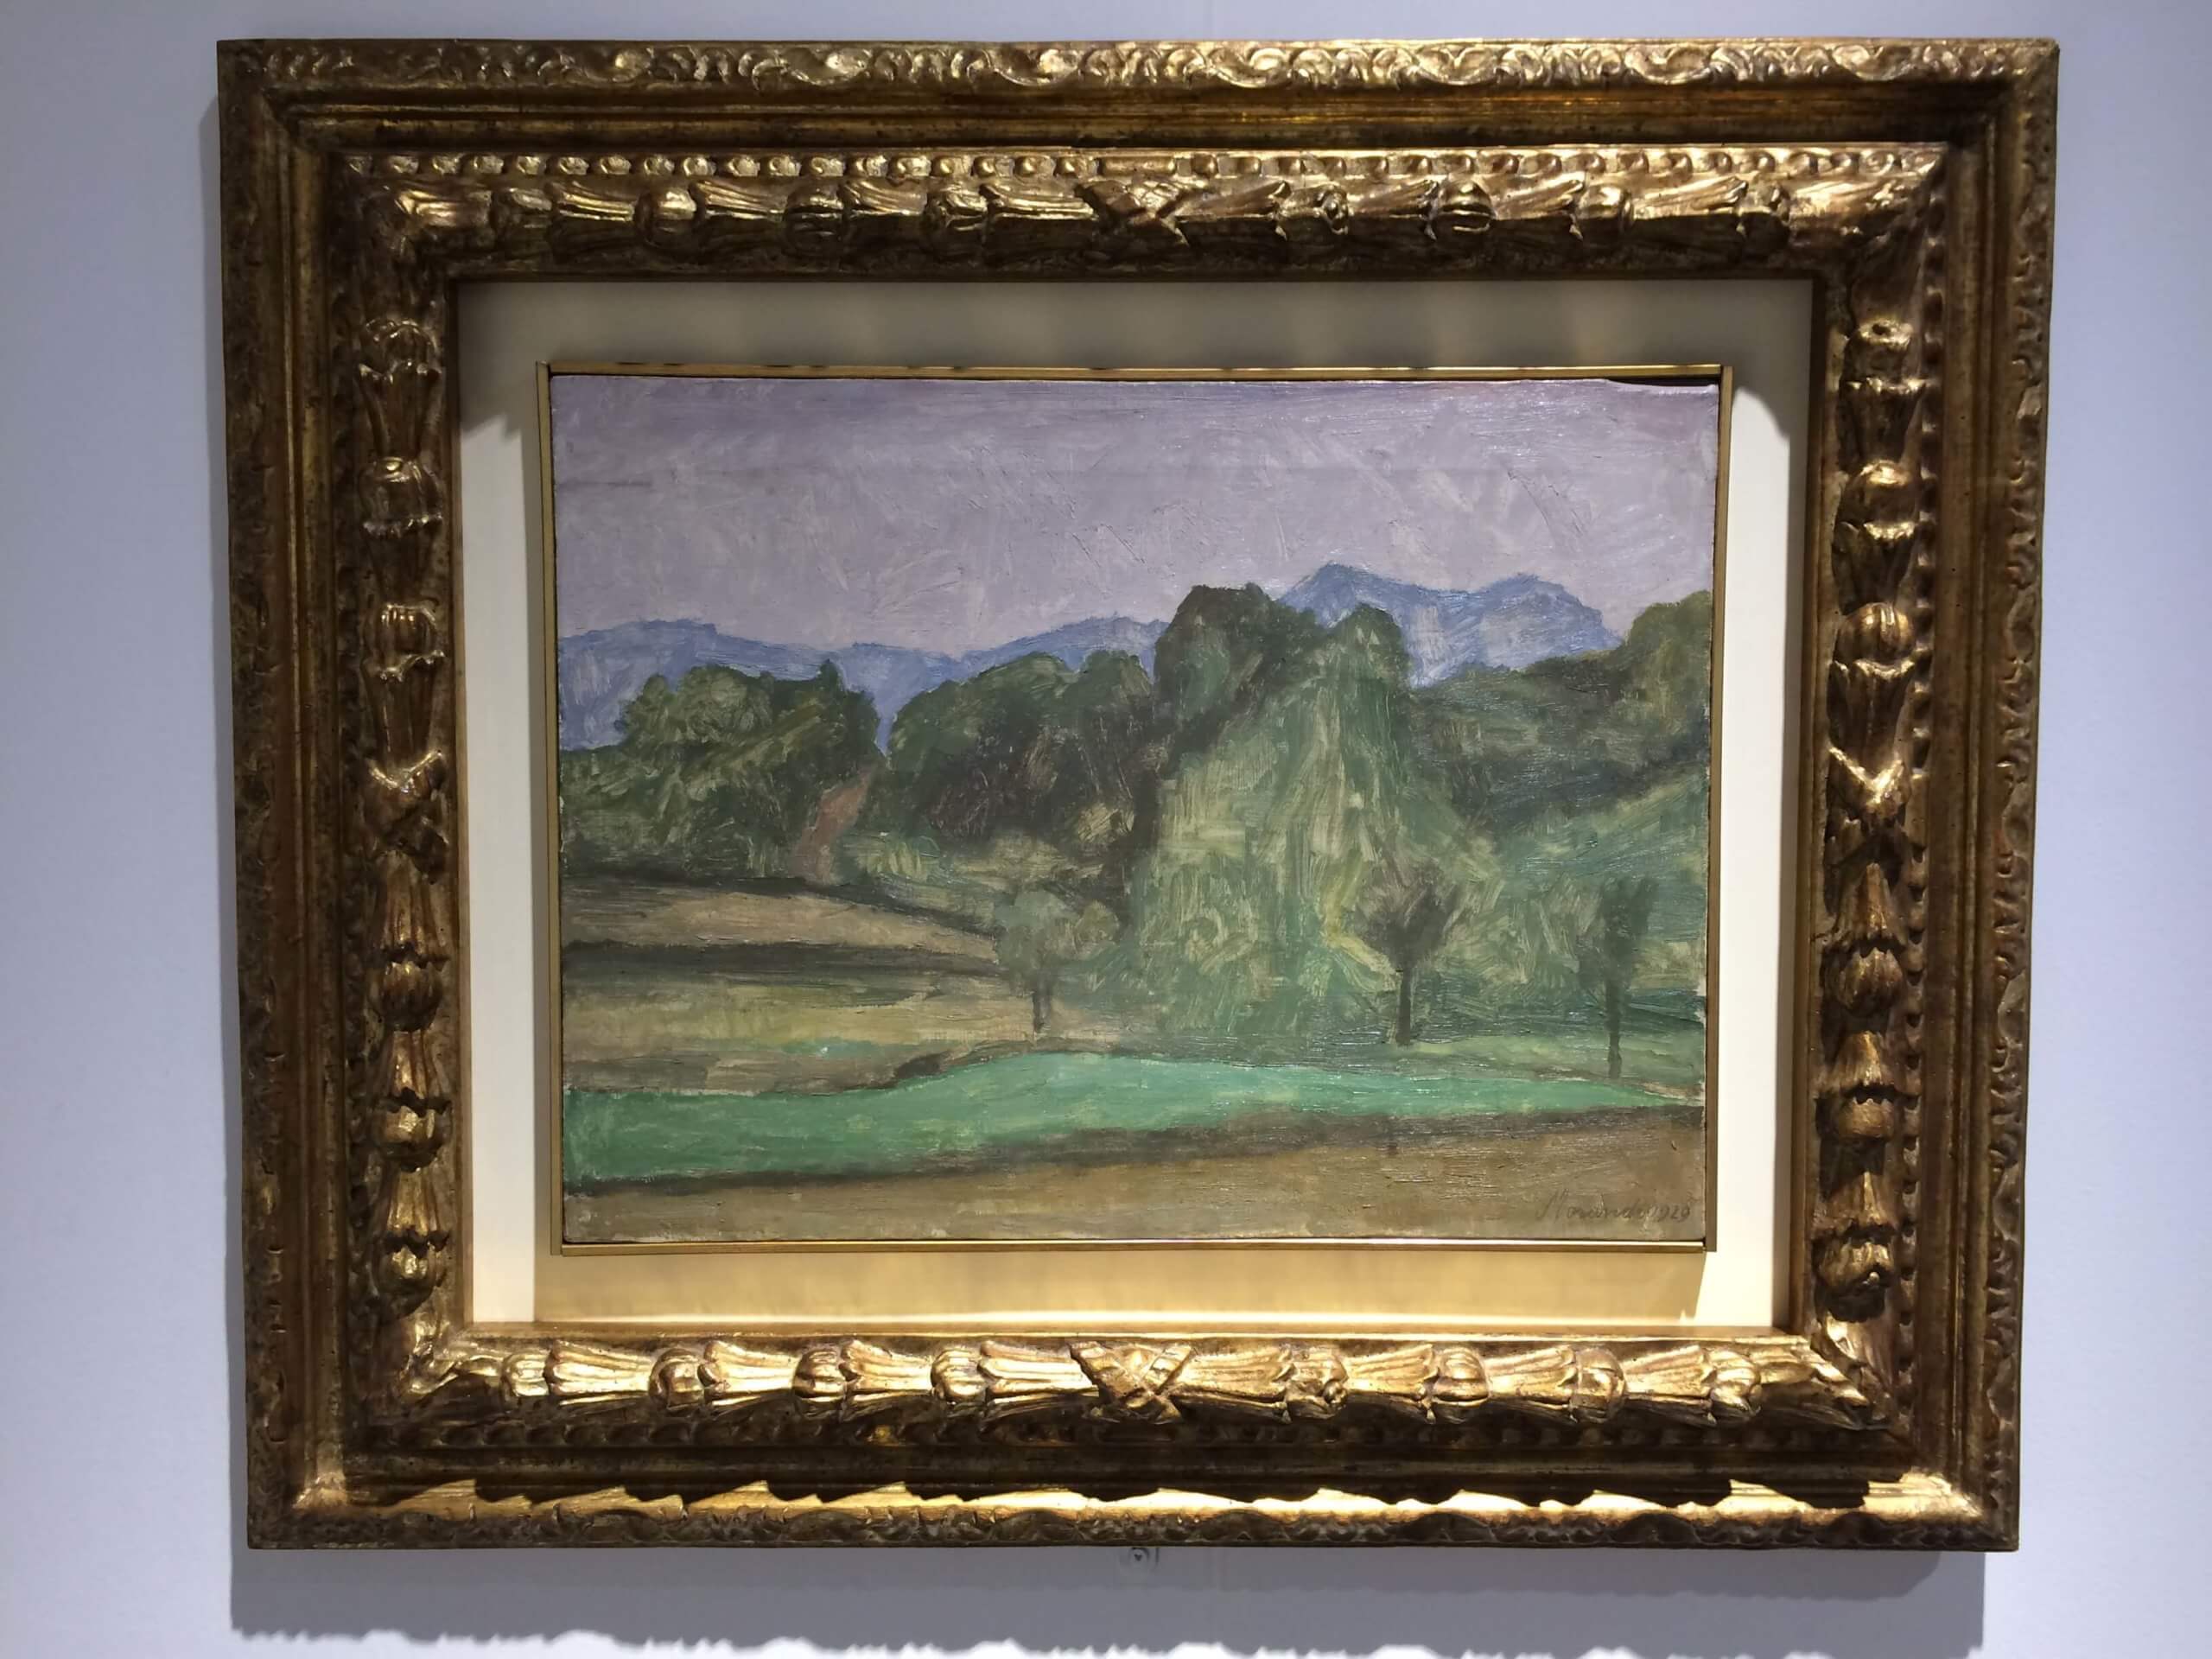 Giorgio Morandi painting at Galleria del’Arte